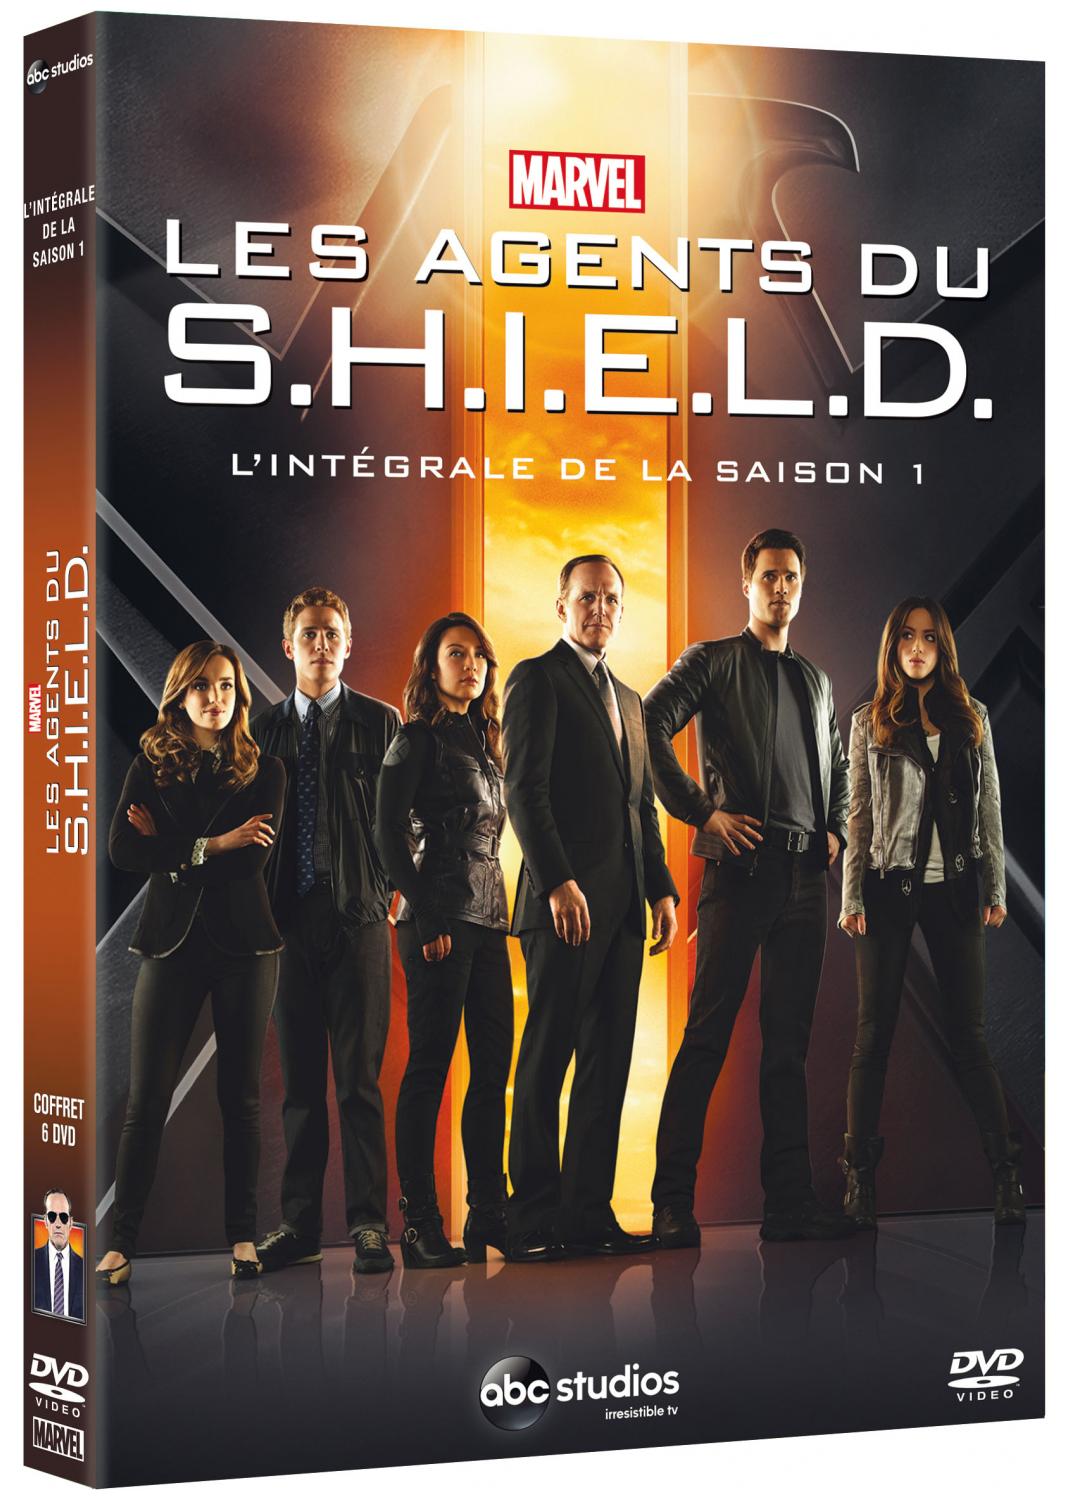 Marvel’s Agents of Shield saison 1 (4.5/5)